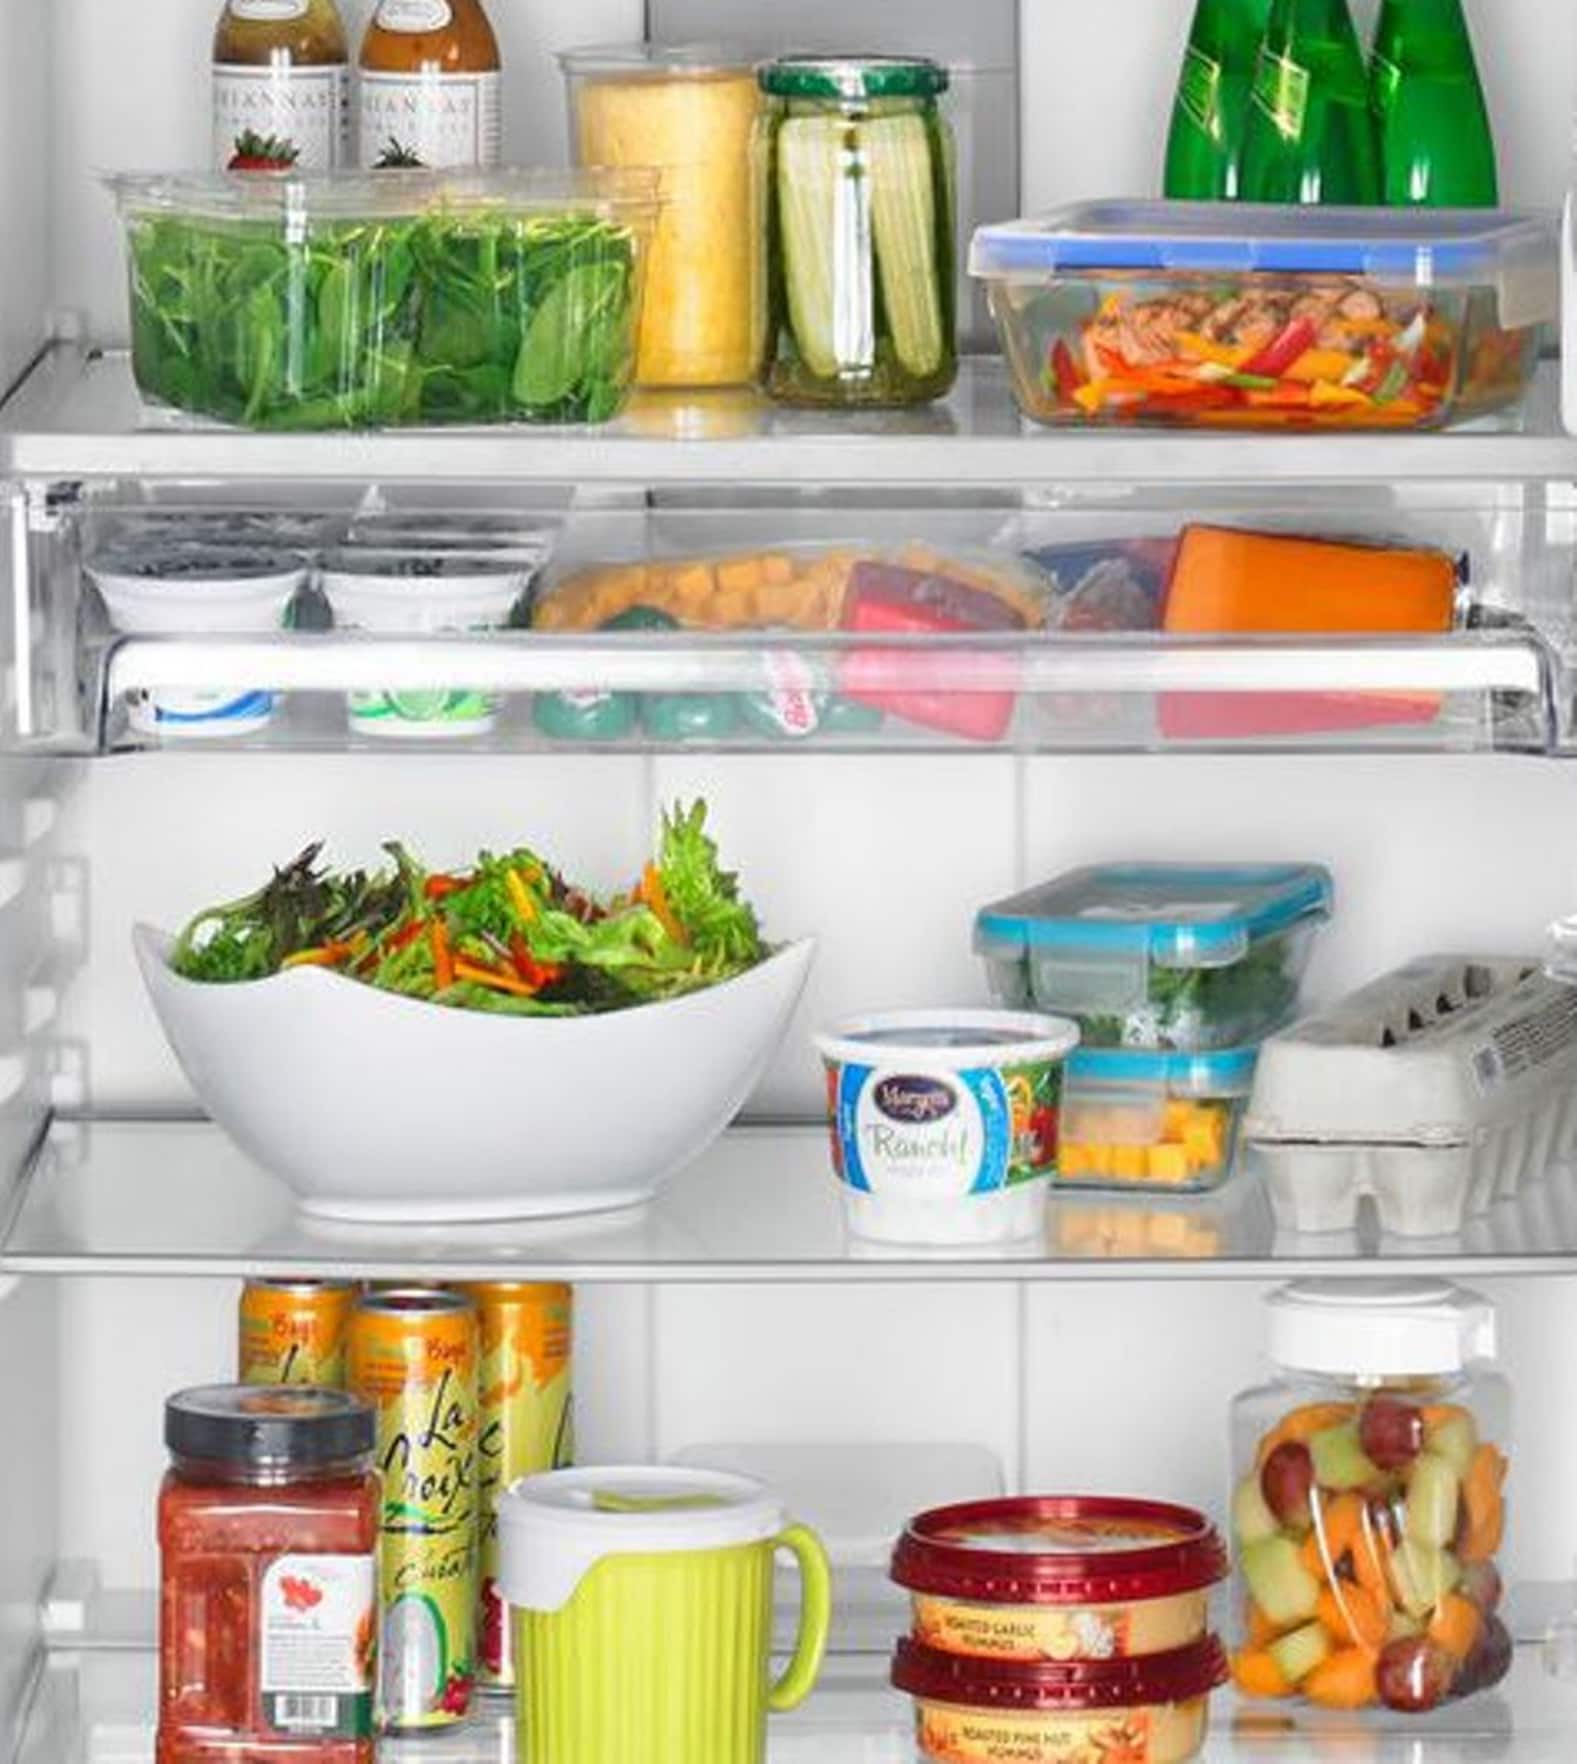 Maytag Full Size Refrigerators Refrigeration Appliances - MRT311FFF